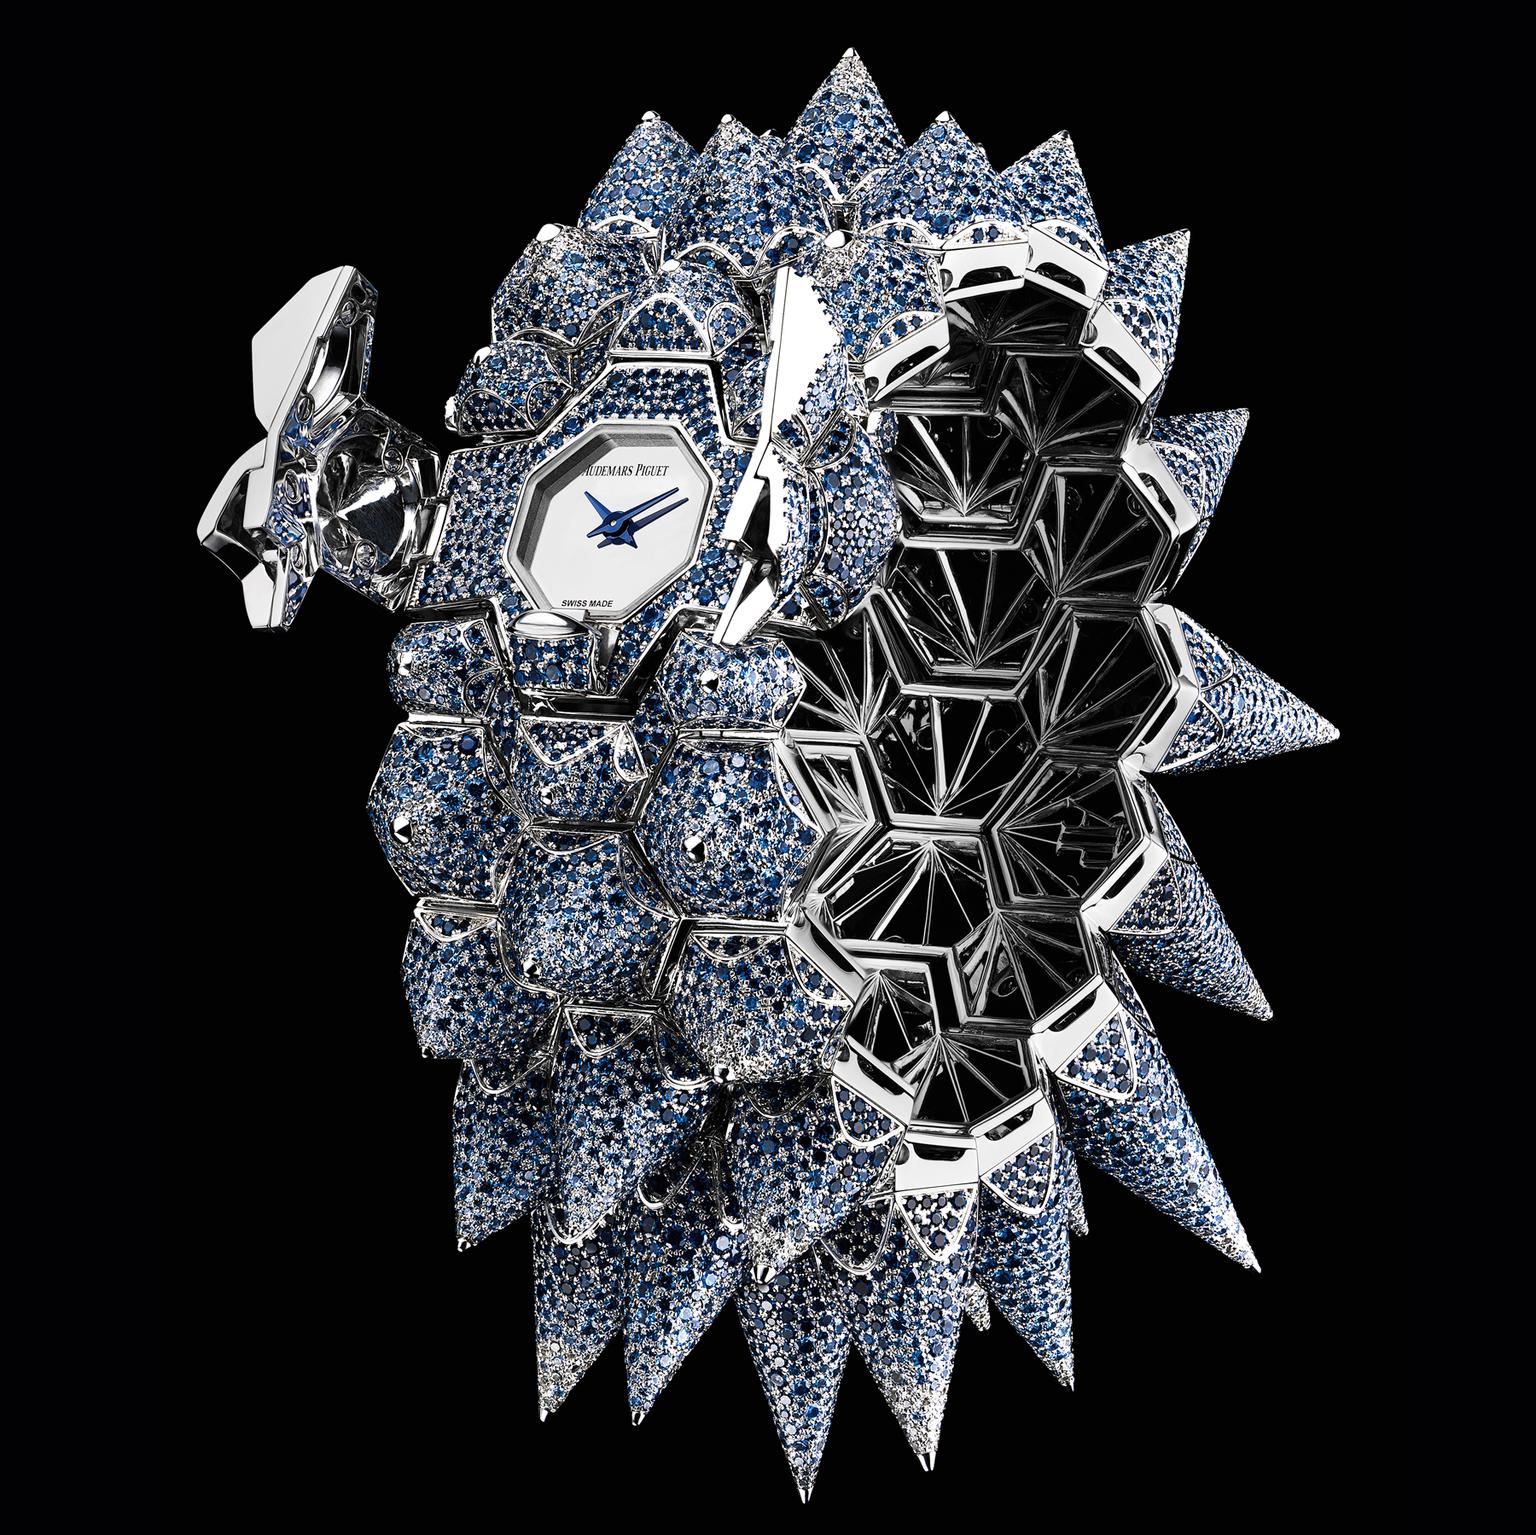 Audemars Piguet Diamond Outrage blue sapphire version